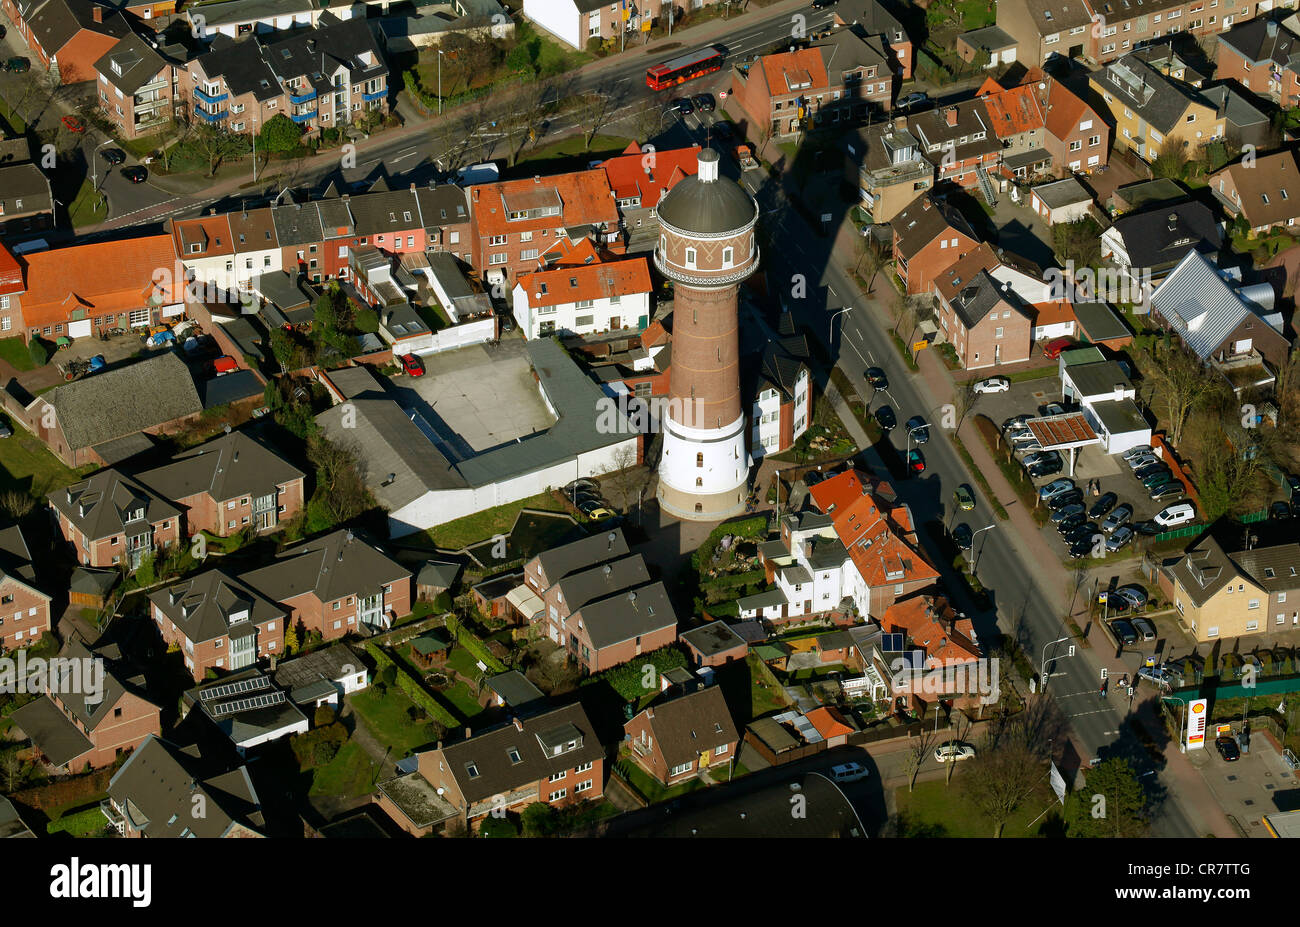 Aerial view, Wasserturm water tower, Kevelaer, Lower Rhine region, North Rhine-Westphalia, Germany, Europe Stock Photo